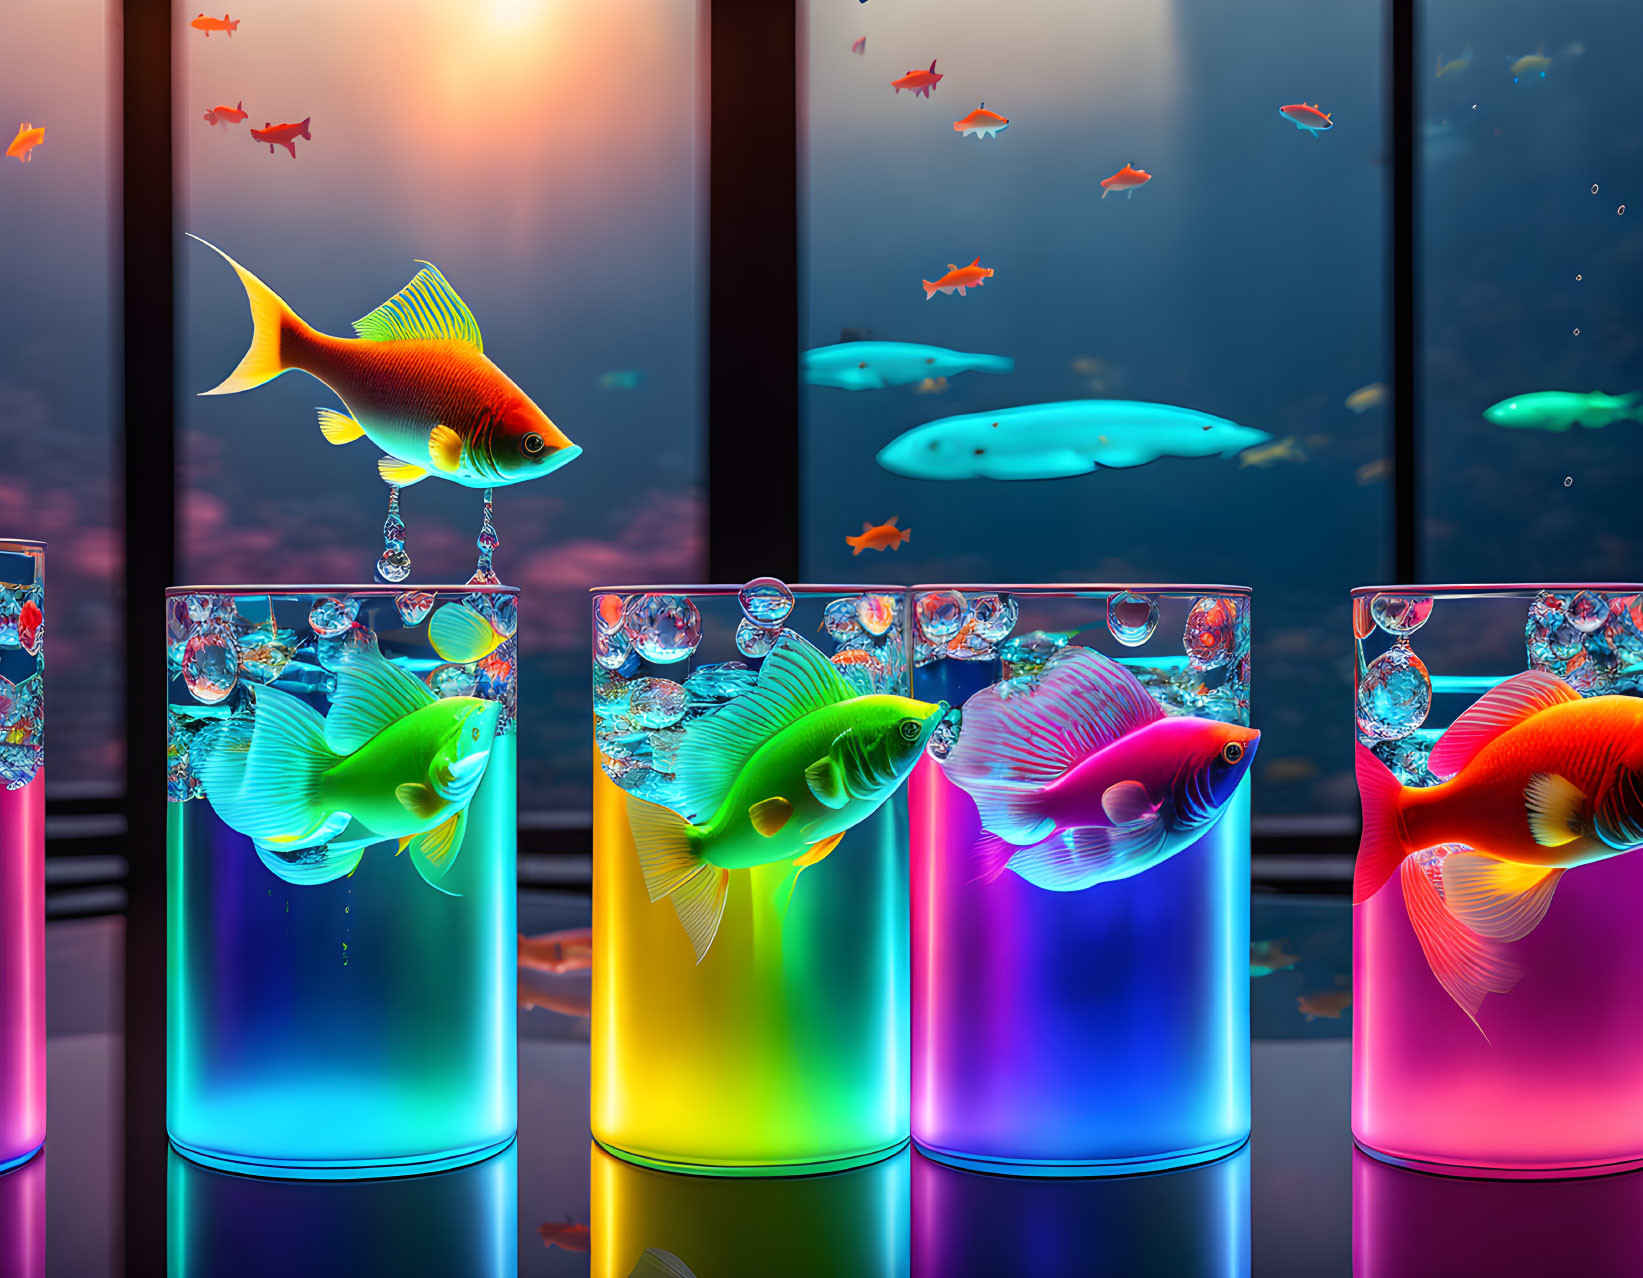 Vibrant fish swimming in glowing glasses in aquarium setting